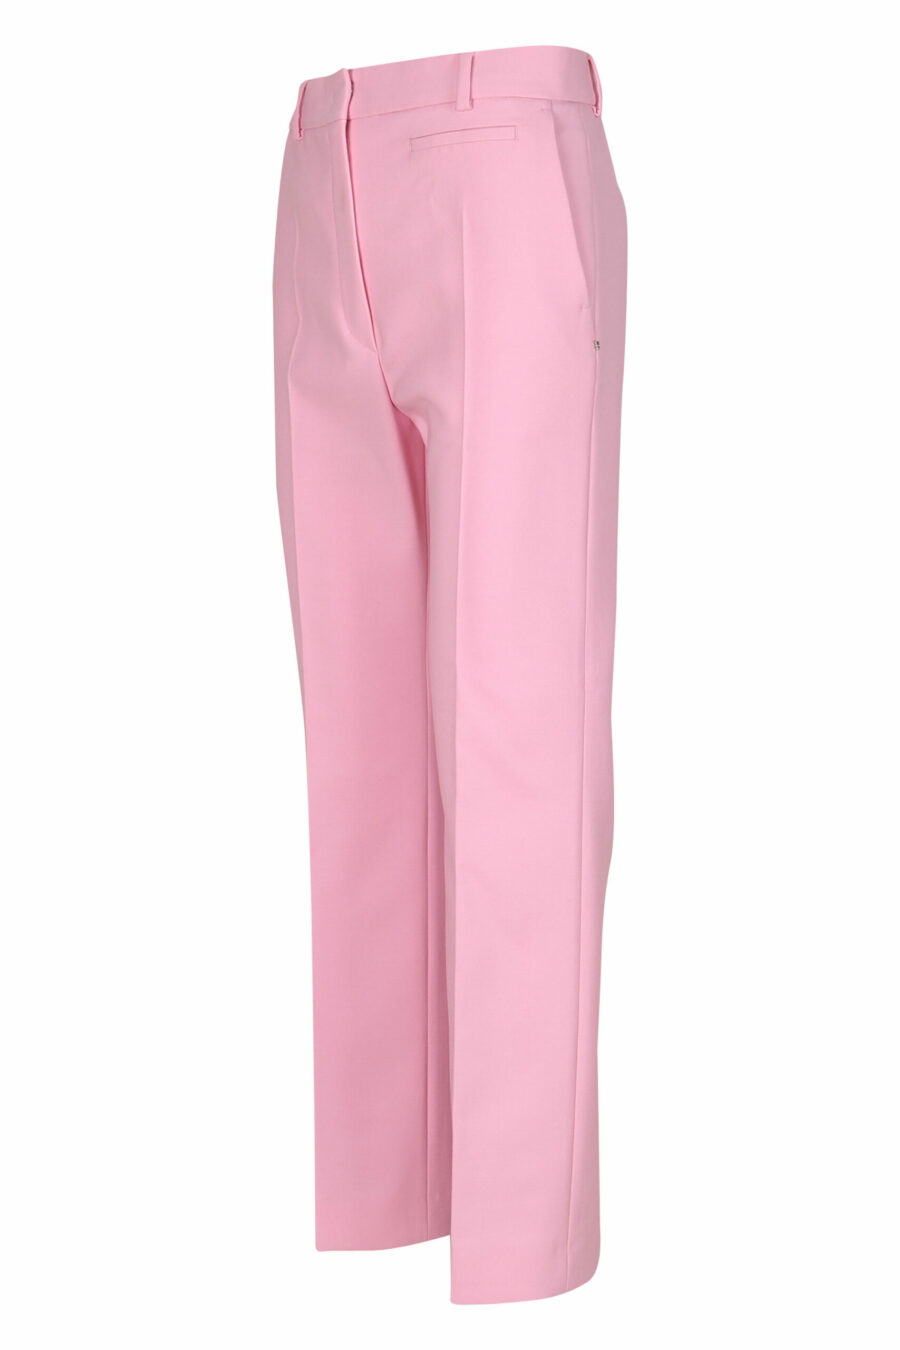 Pantalón rosa ancho - 21310741060053 1 scaled